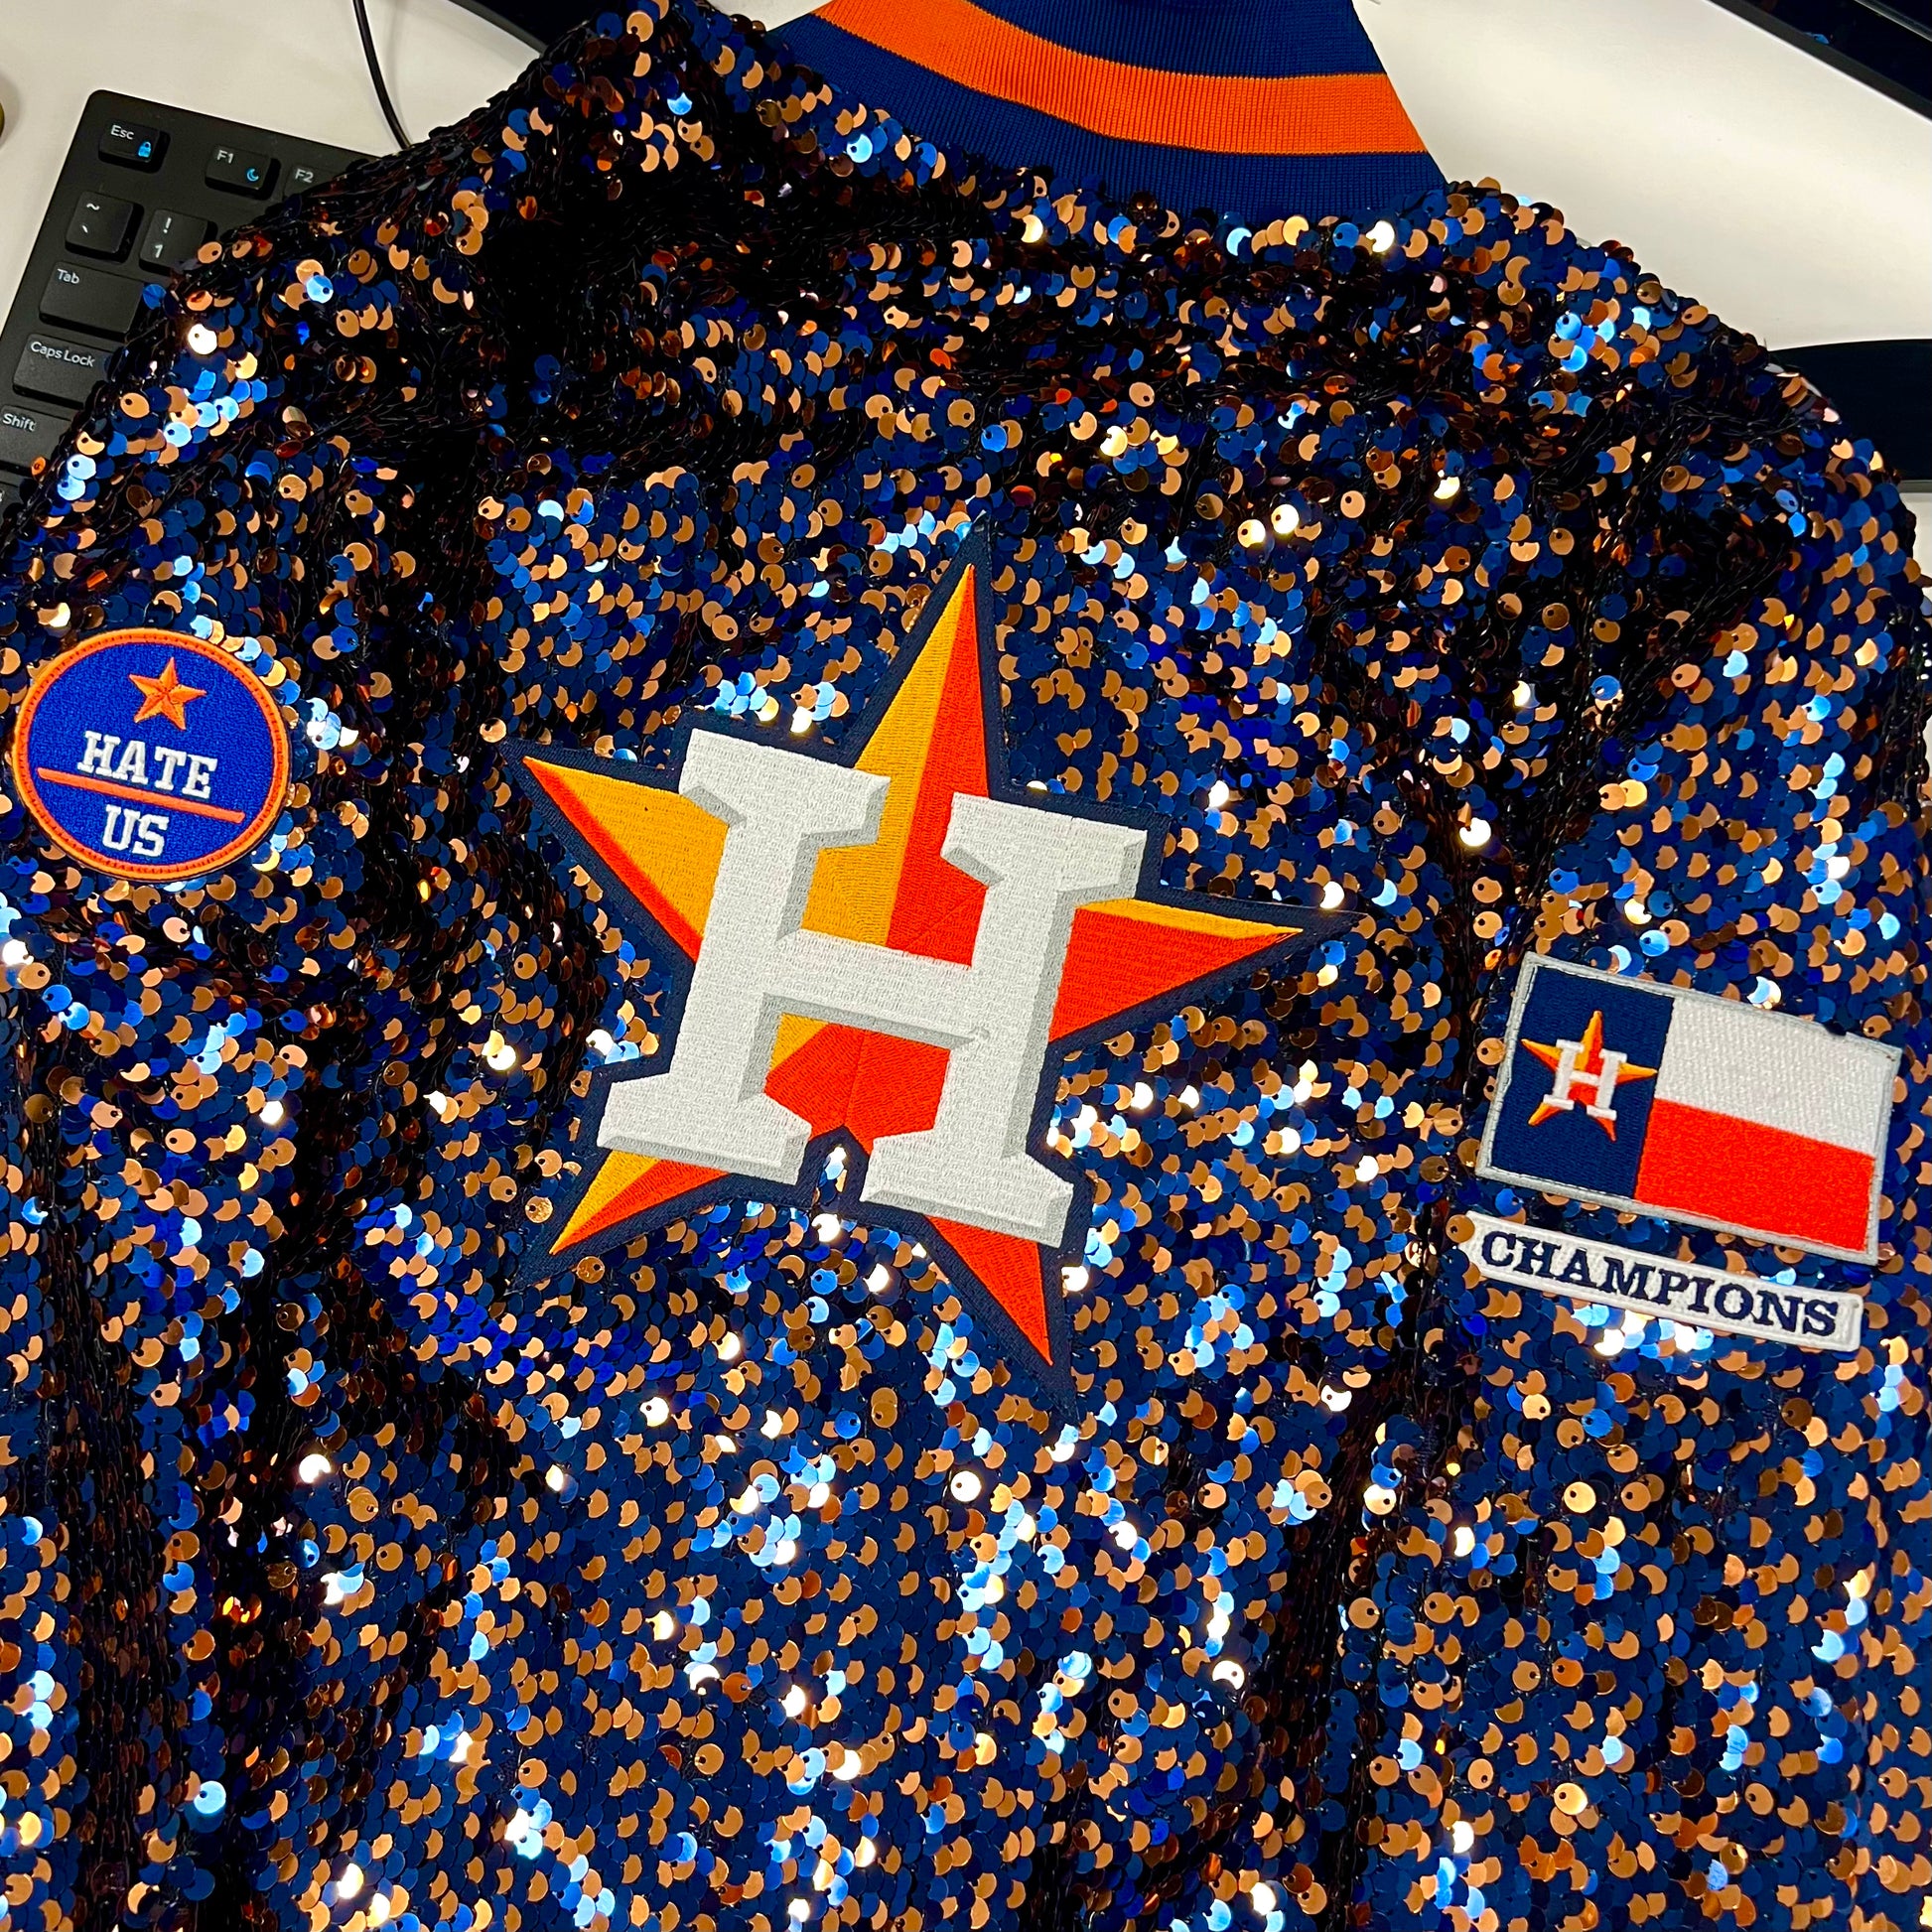 Astros sparkle jacket  Houston Astros glitter jacket